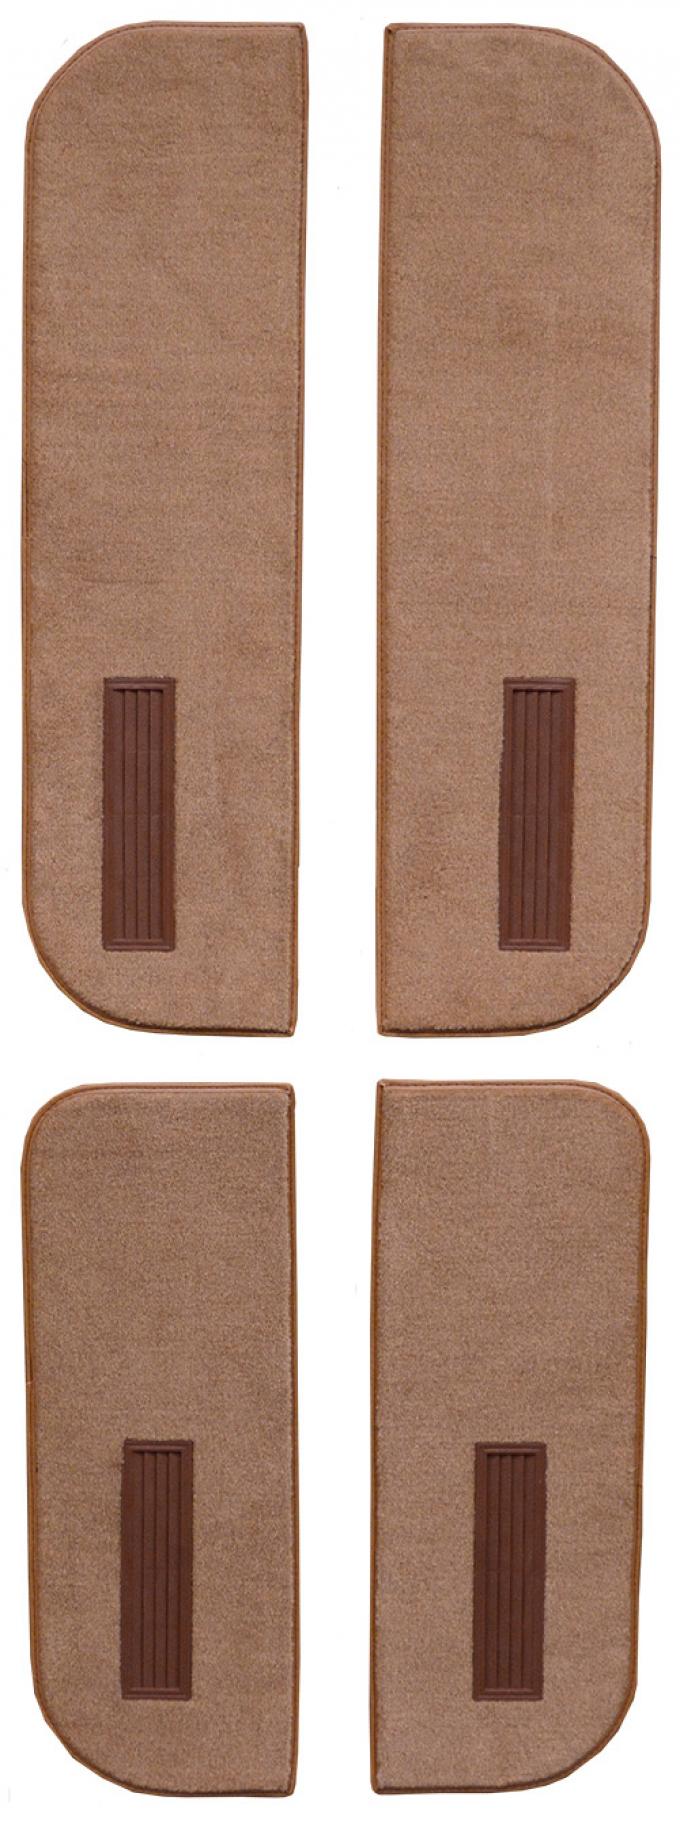 ACC 1973 Chevrolet K20 Suburban Door Panel Inserts on Cardboard w/Vents 4pc Loop Carpet